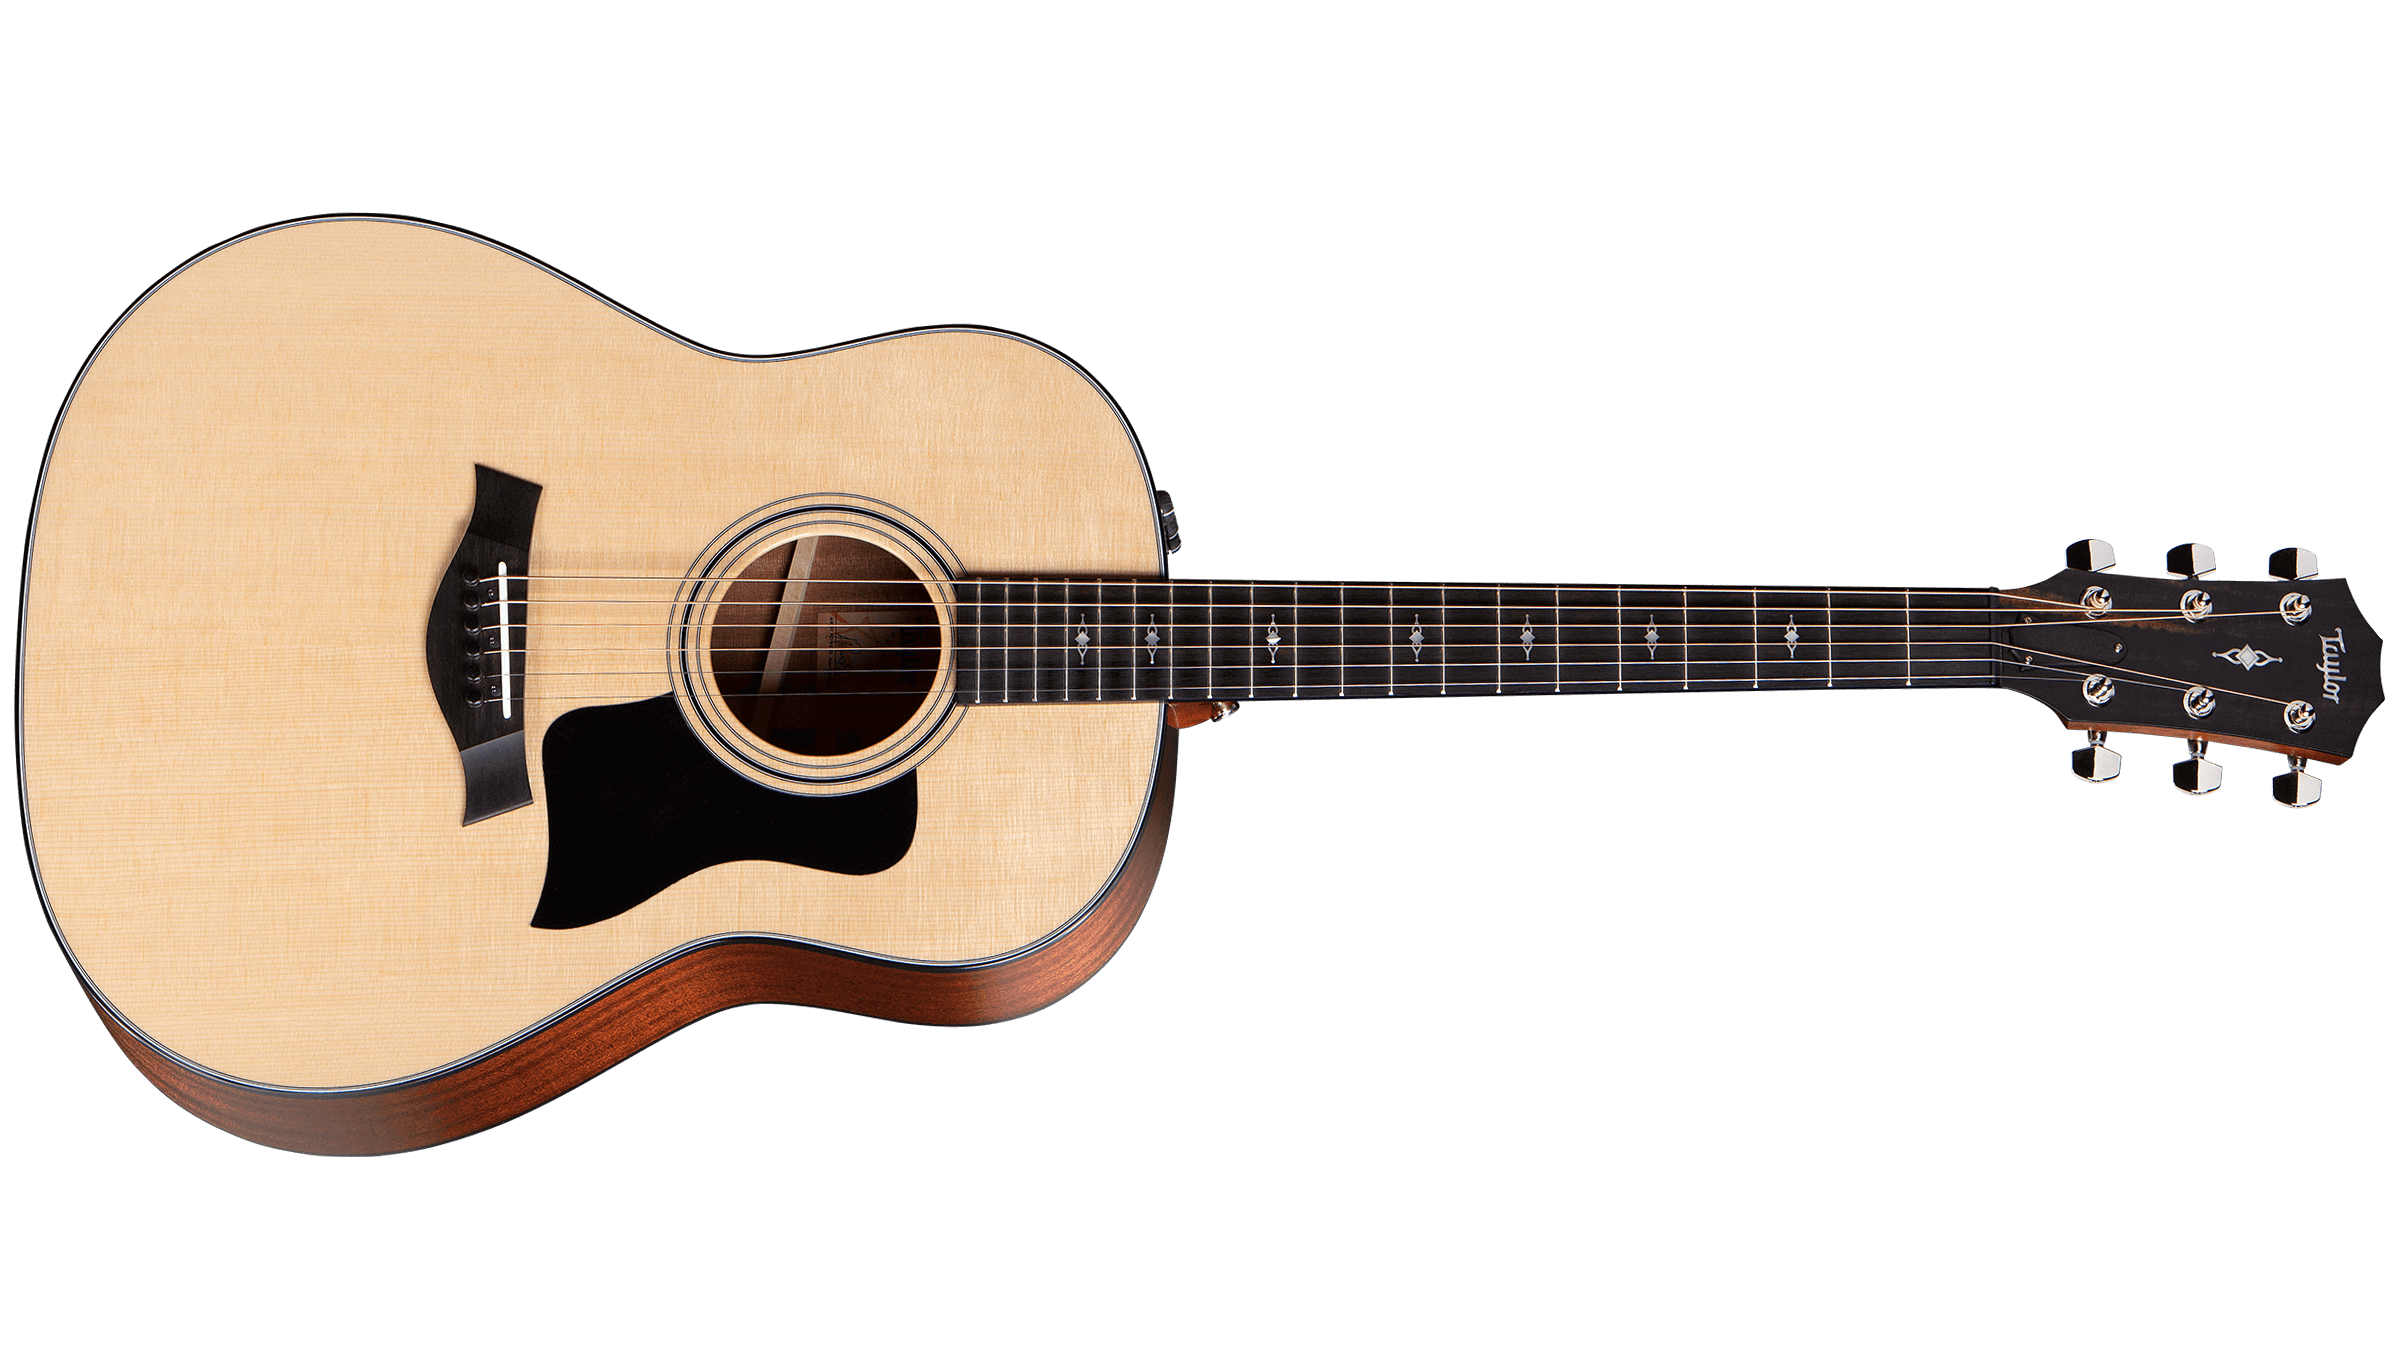 Taylor Guitars 317E Grand Pacific Acoustic Guitar Review